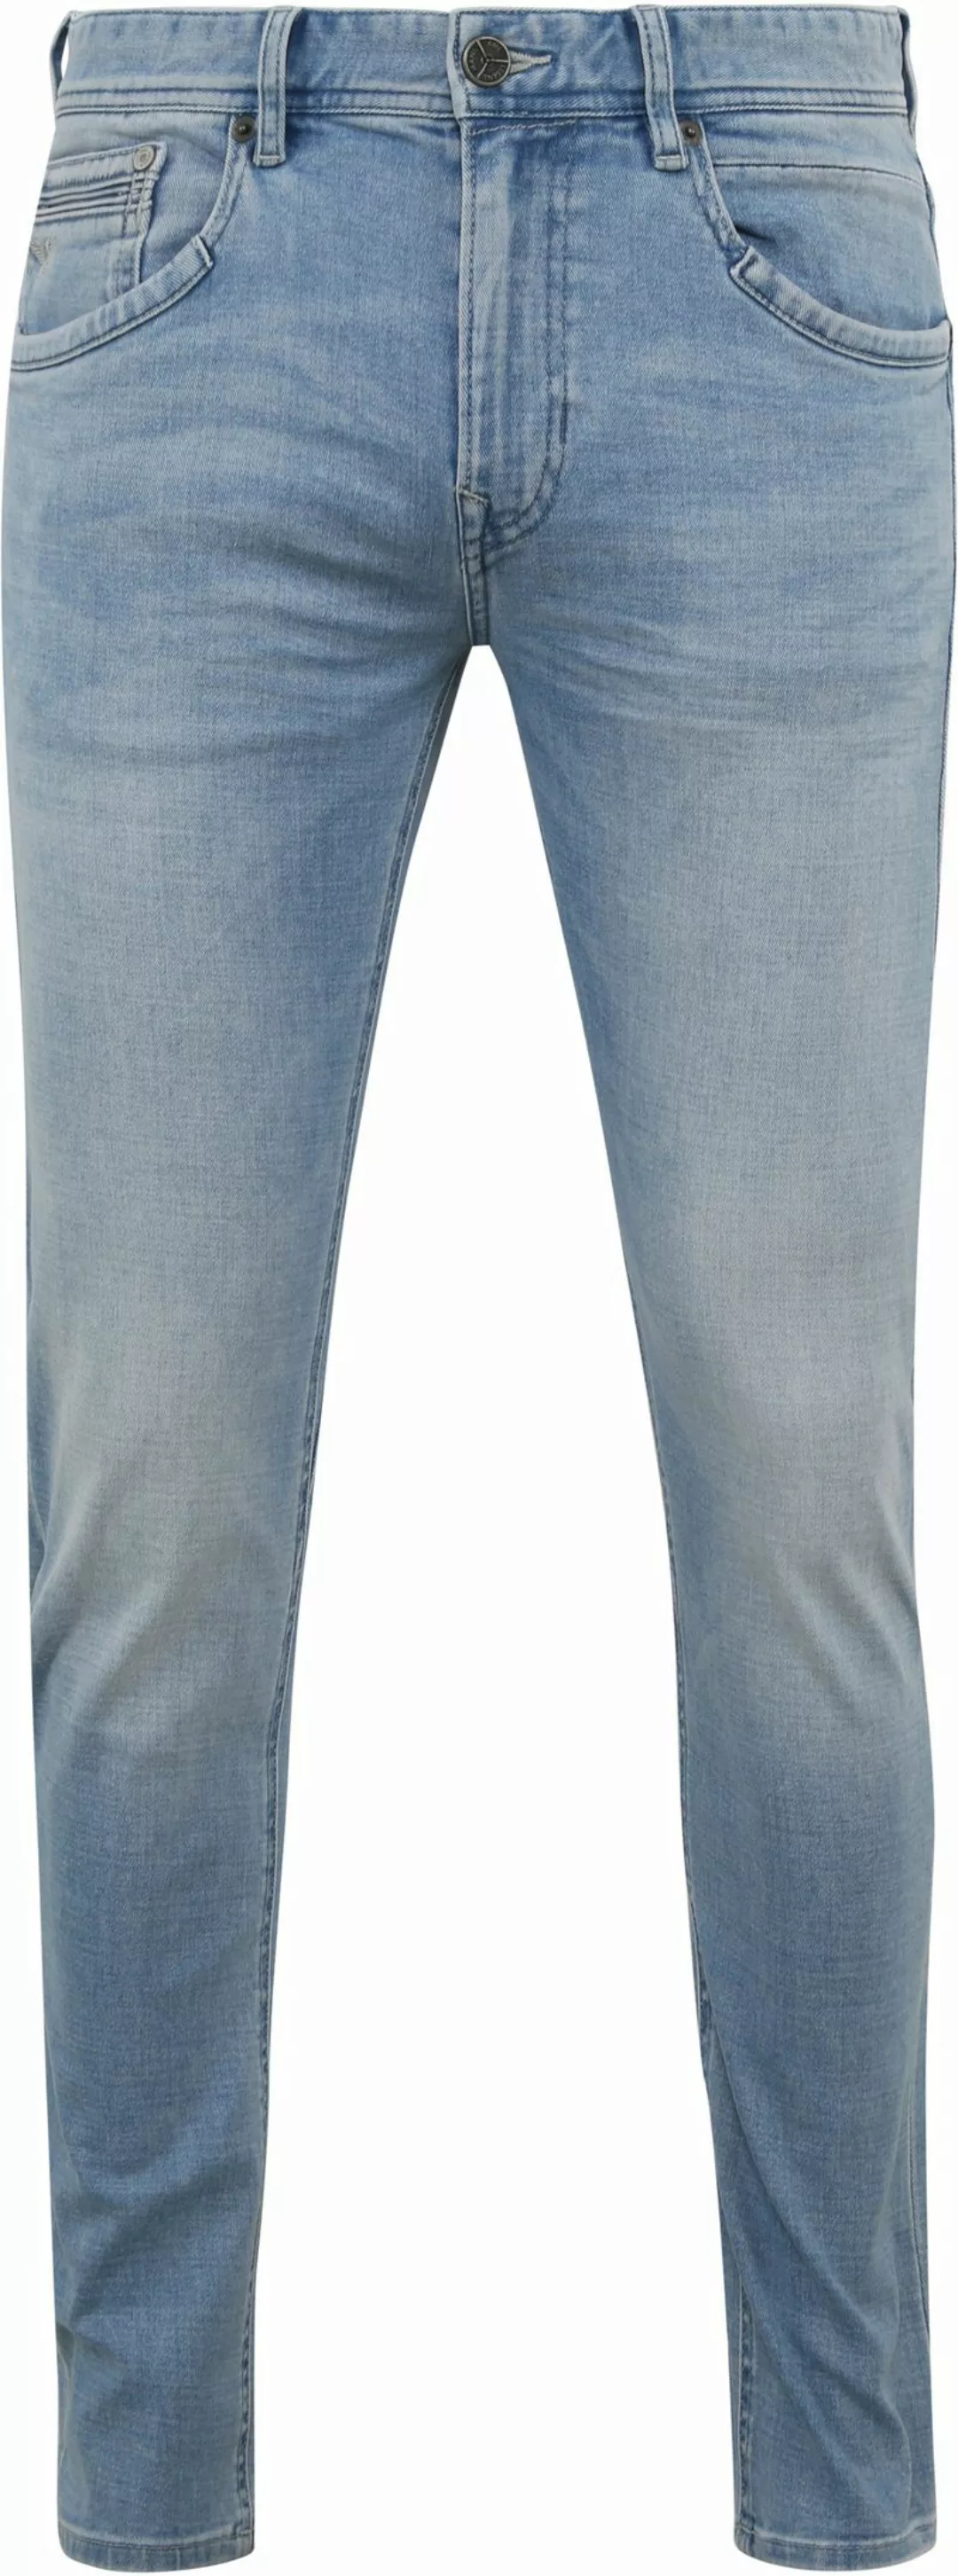 PME Legend Tailwheel Jeans Hellblau CLB - Größe W 38 - L 30 günstig online kaufen